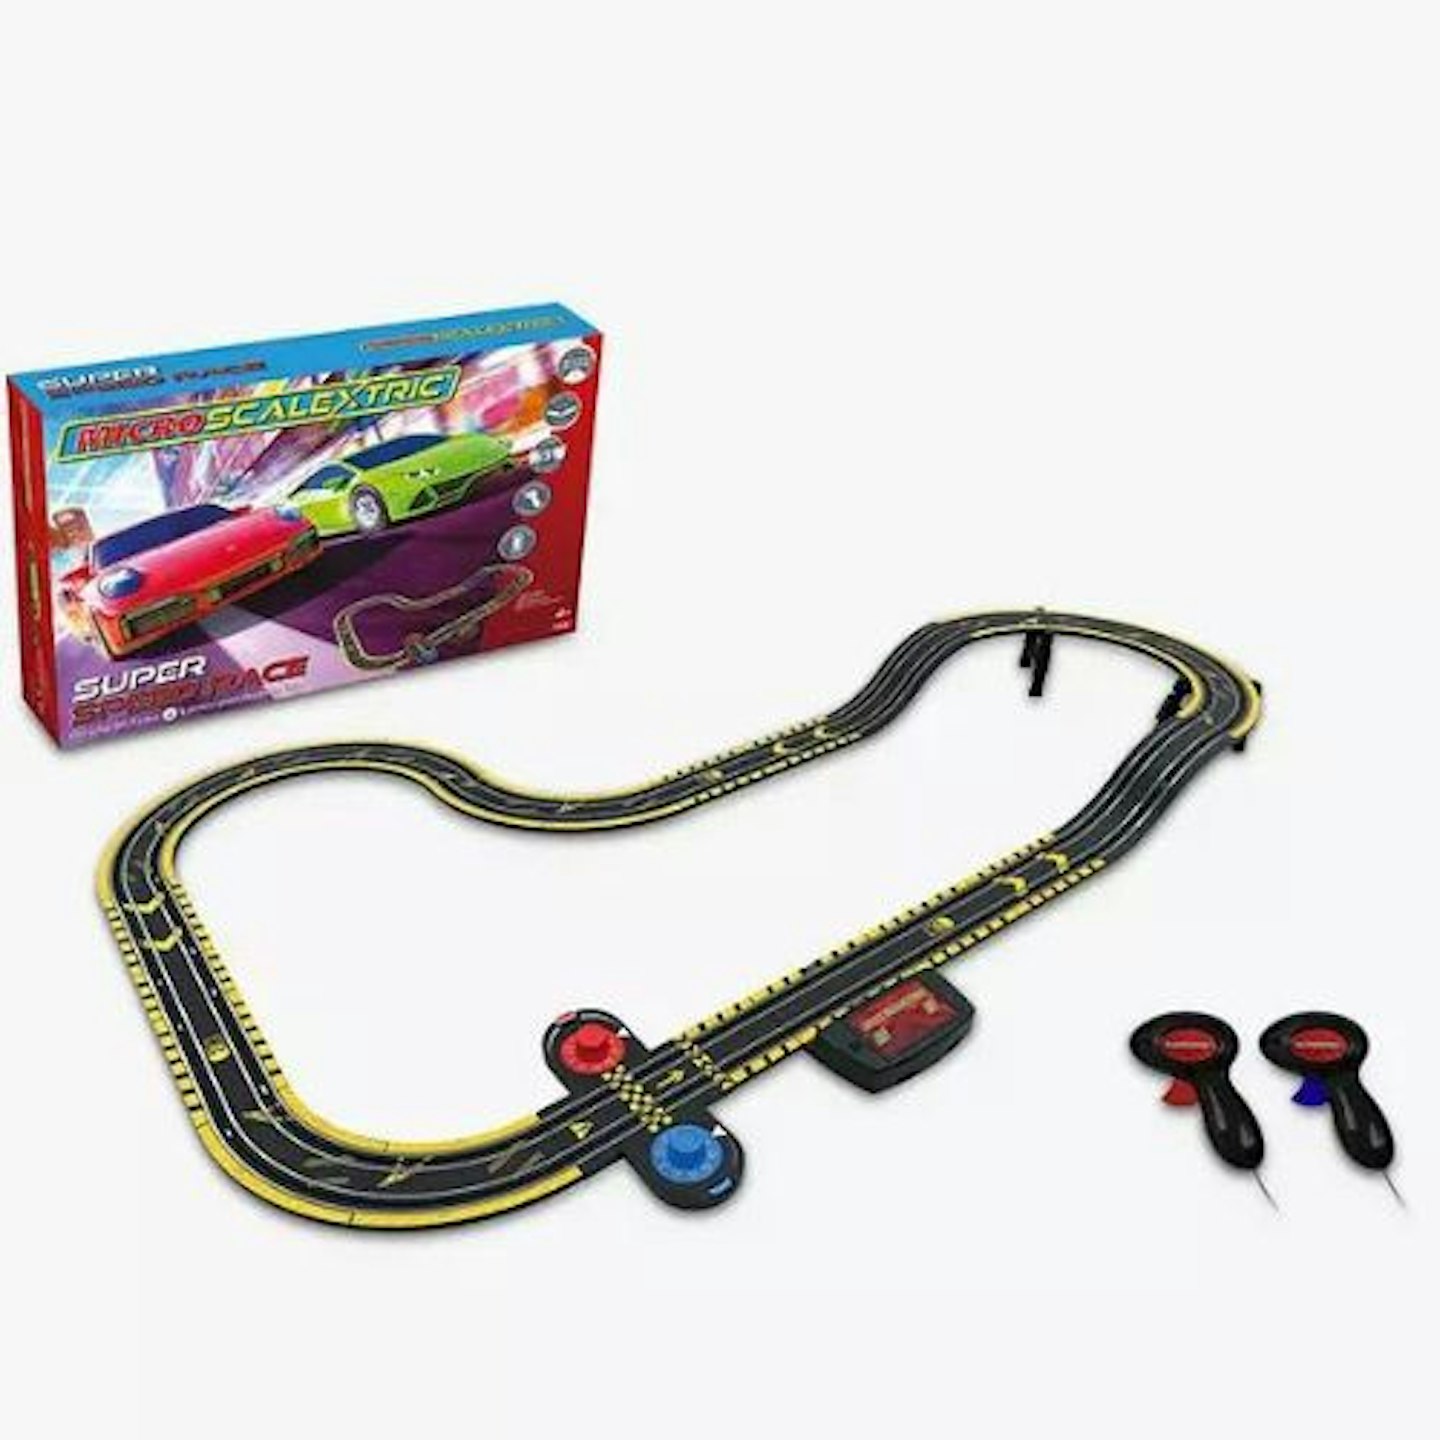 Scalextric Micro Super Speed Race Set